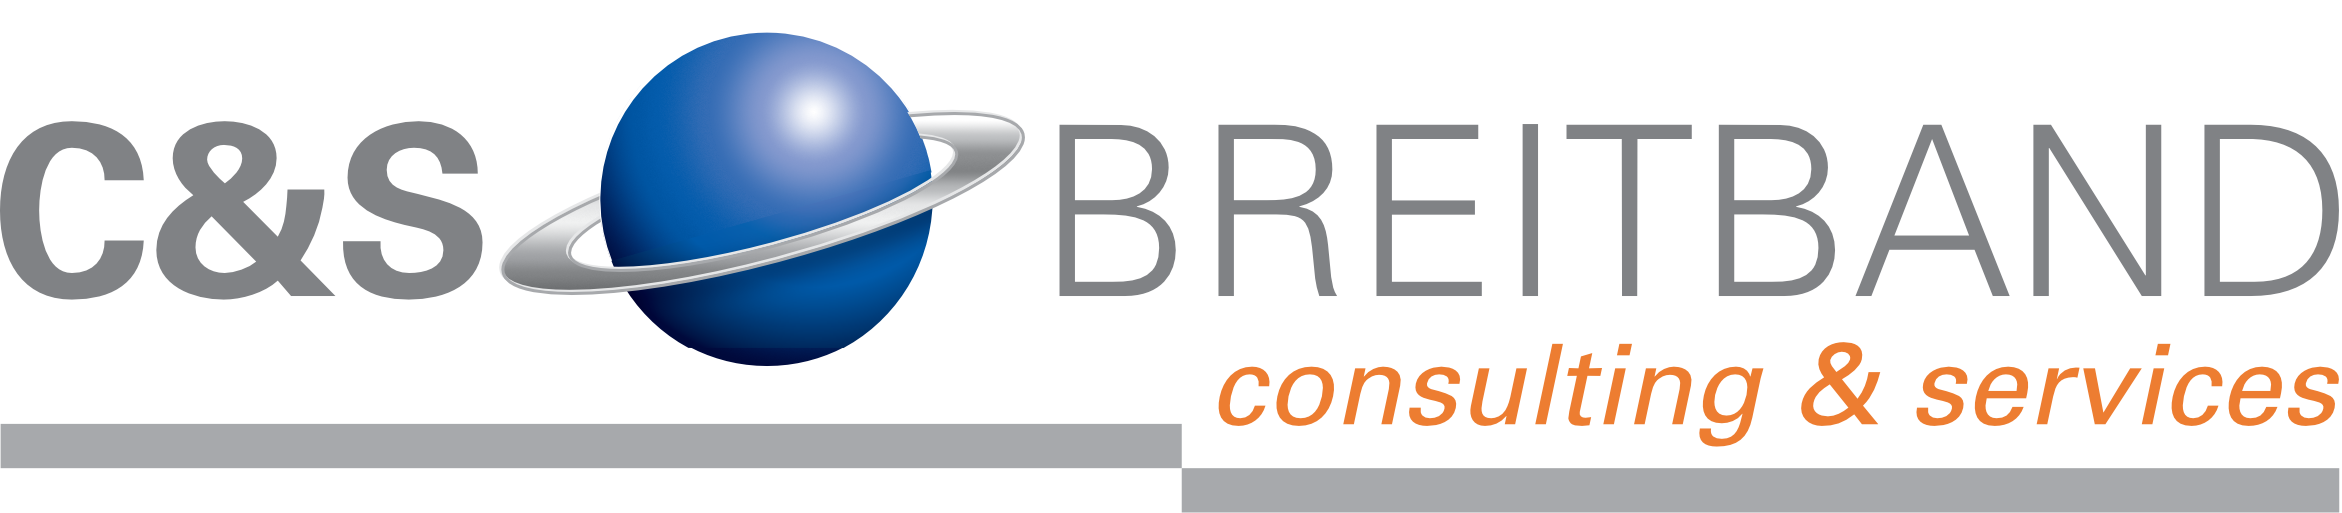 Logo C&S Breitband GmbH